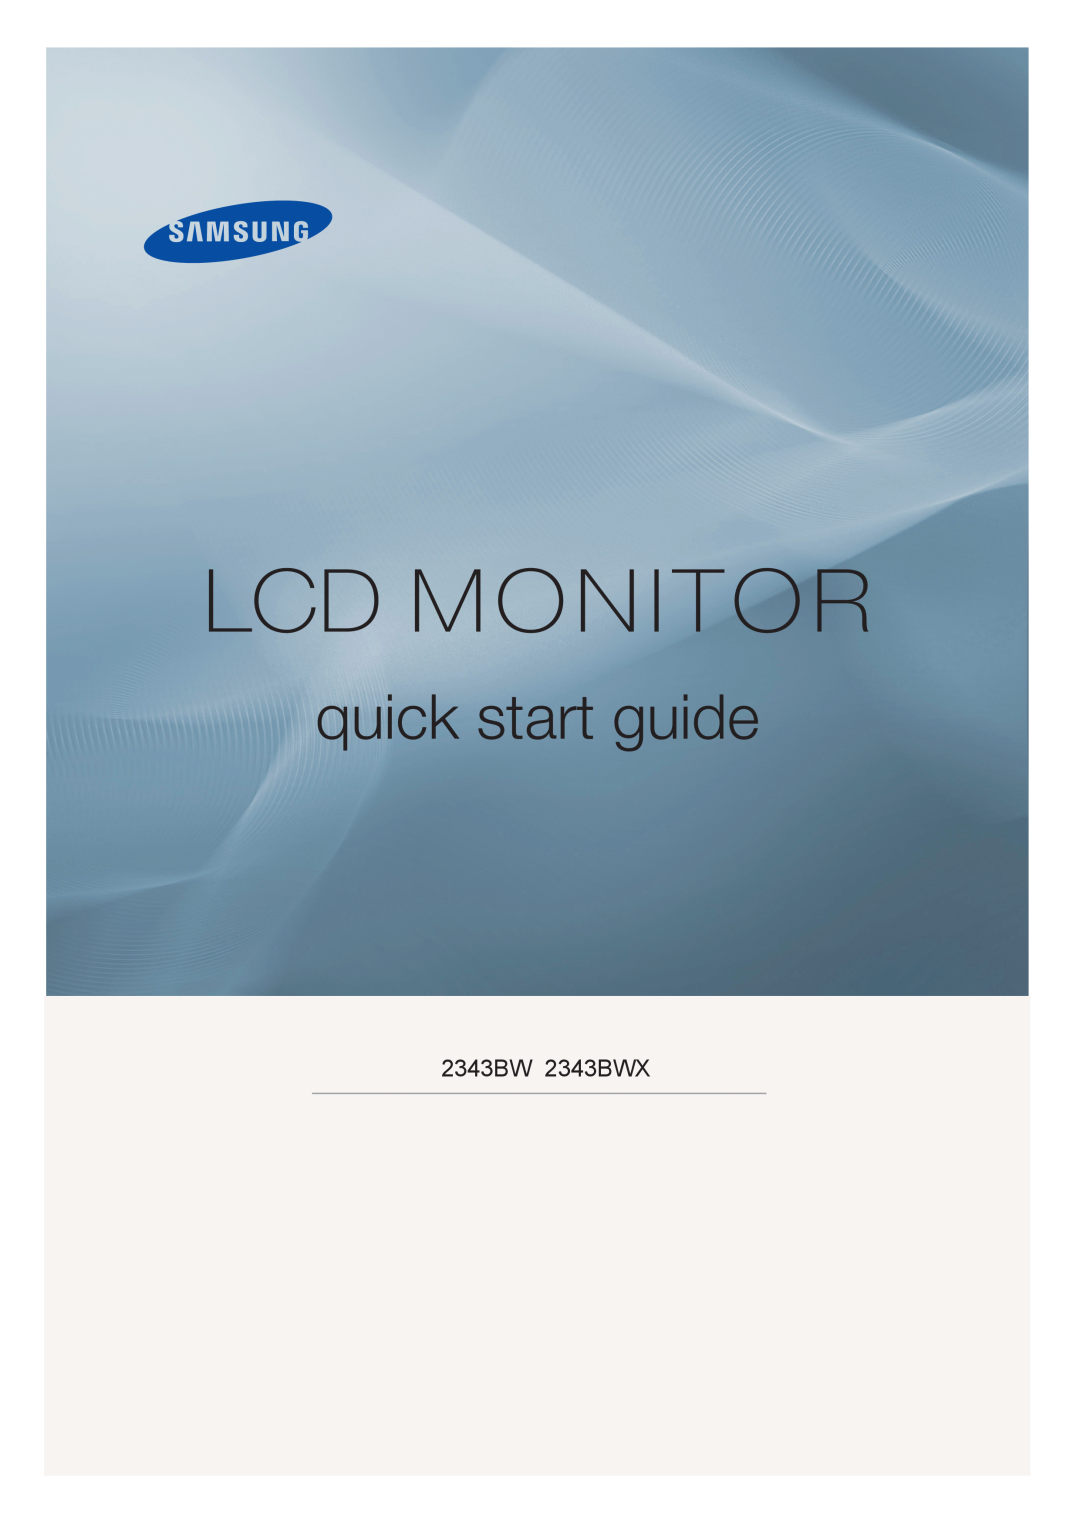 Samsung quick start Lcd Monitor, quick start guide, 2343BW 2343BWX 